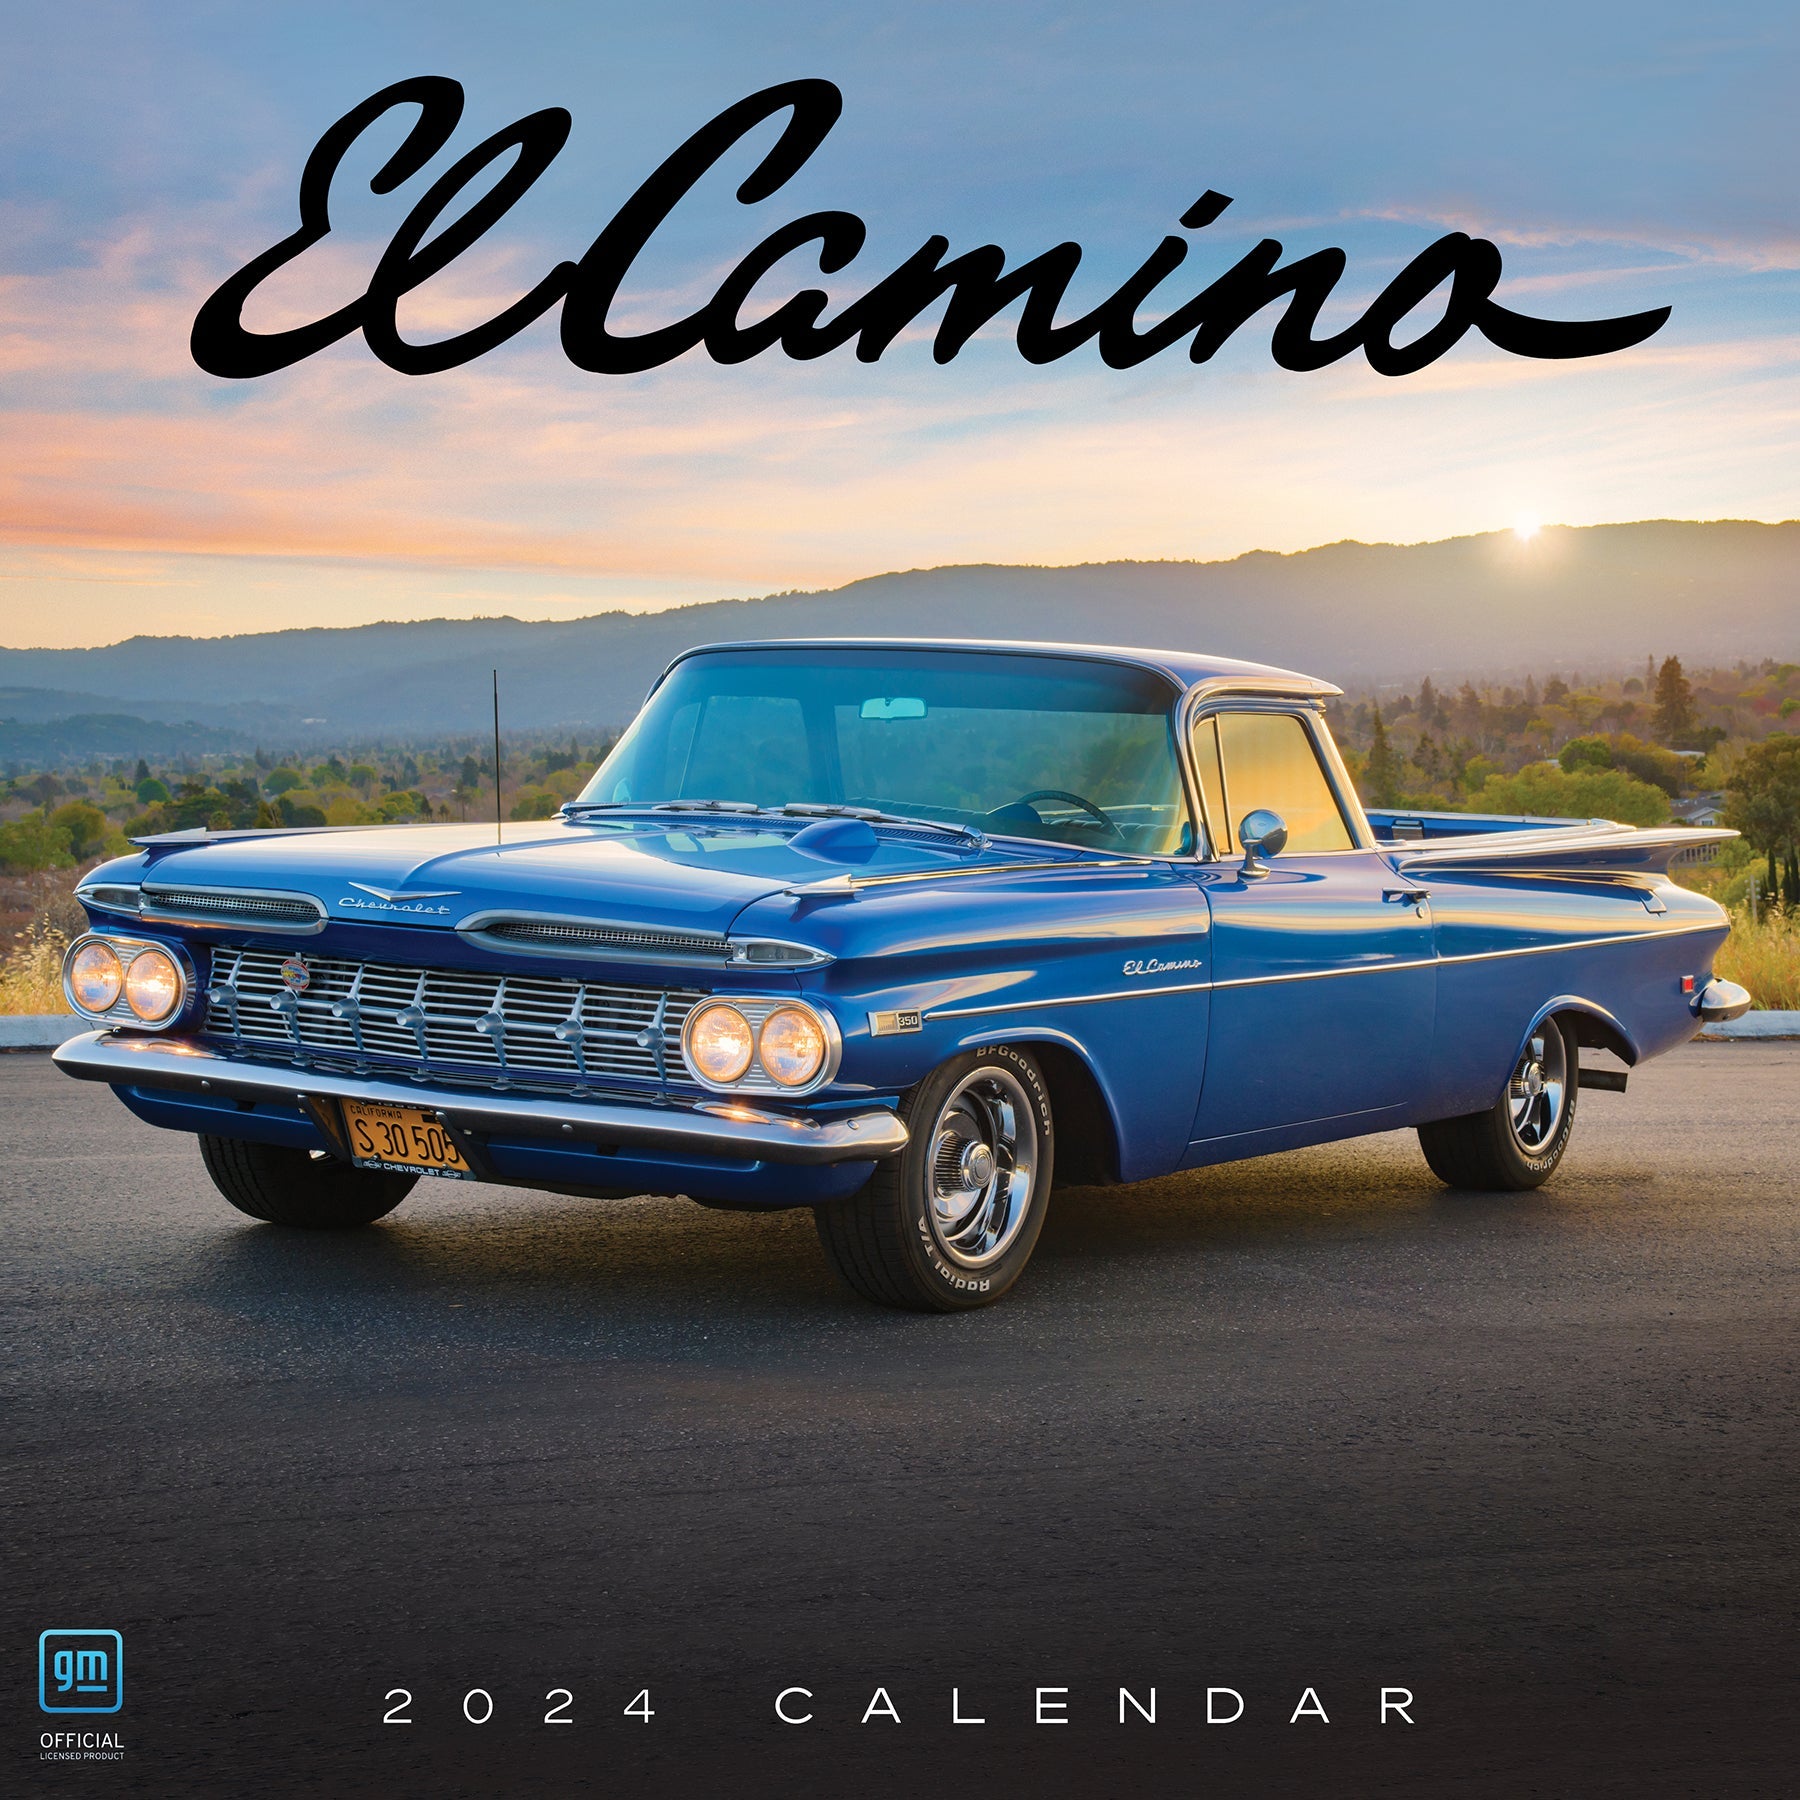 2024 El Camino - Wall Calendar